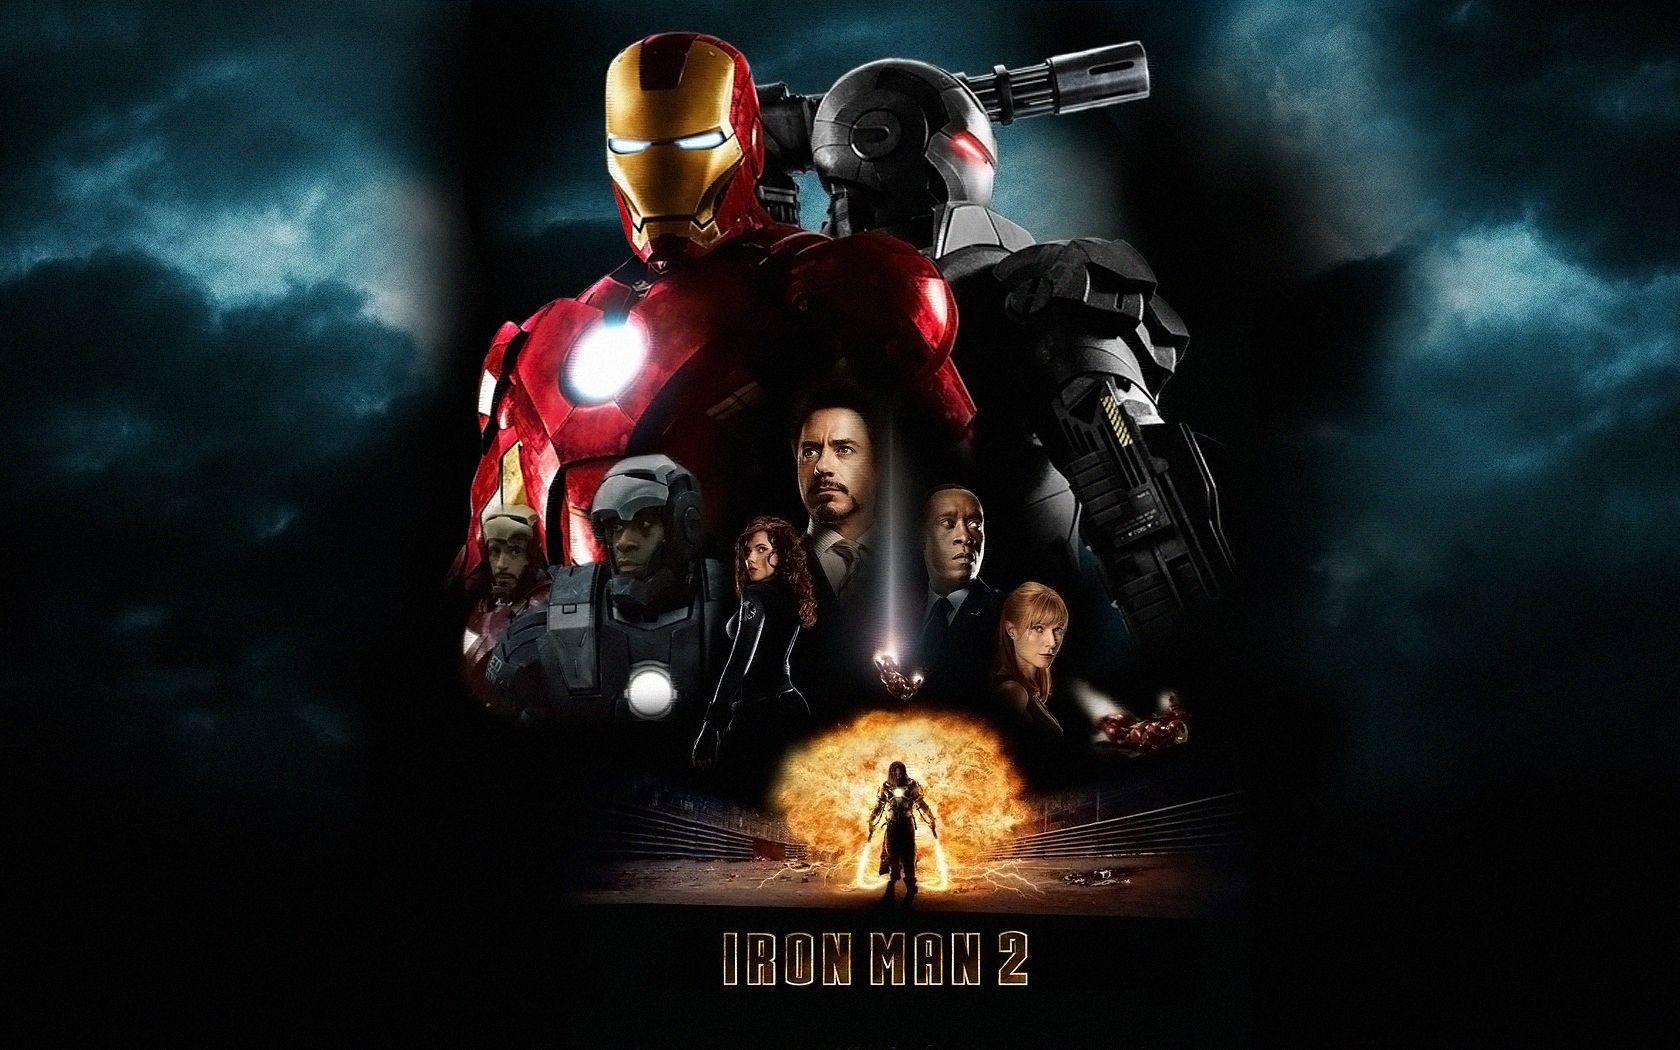 1680x1050 Movies 2010 Iron Man 2 Movie Still wallpaper Desktop, Phone